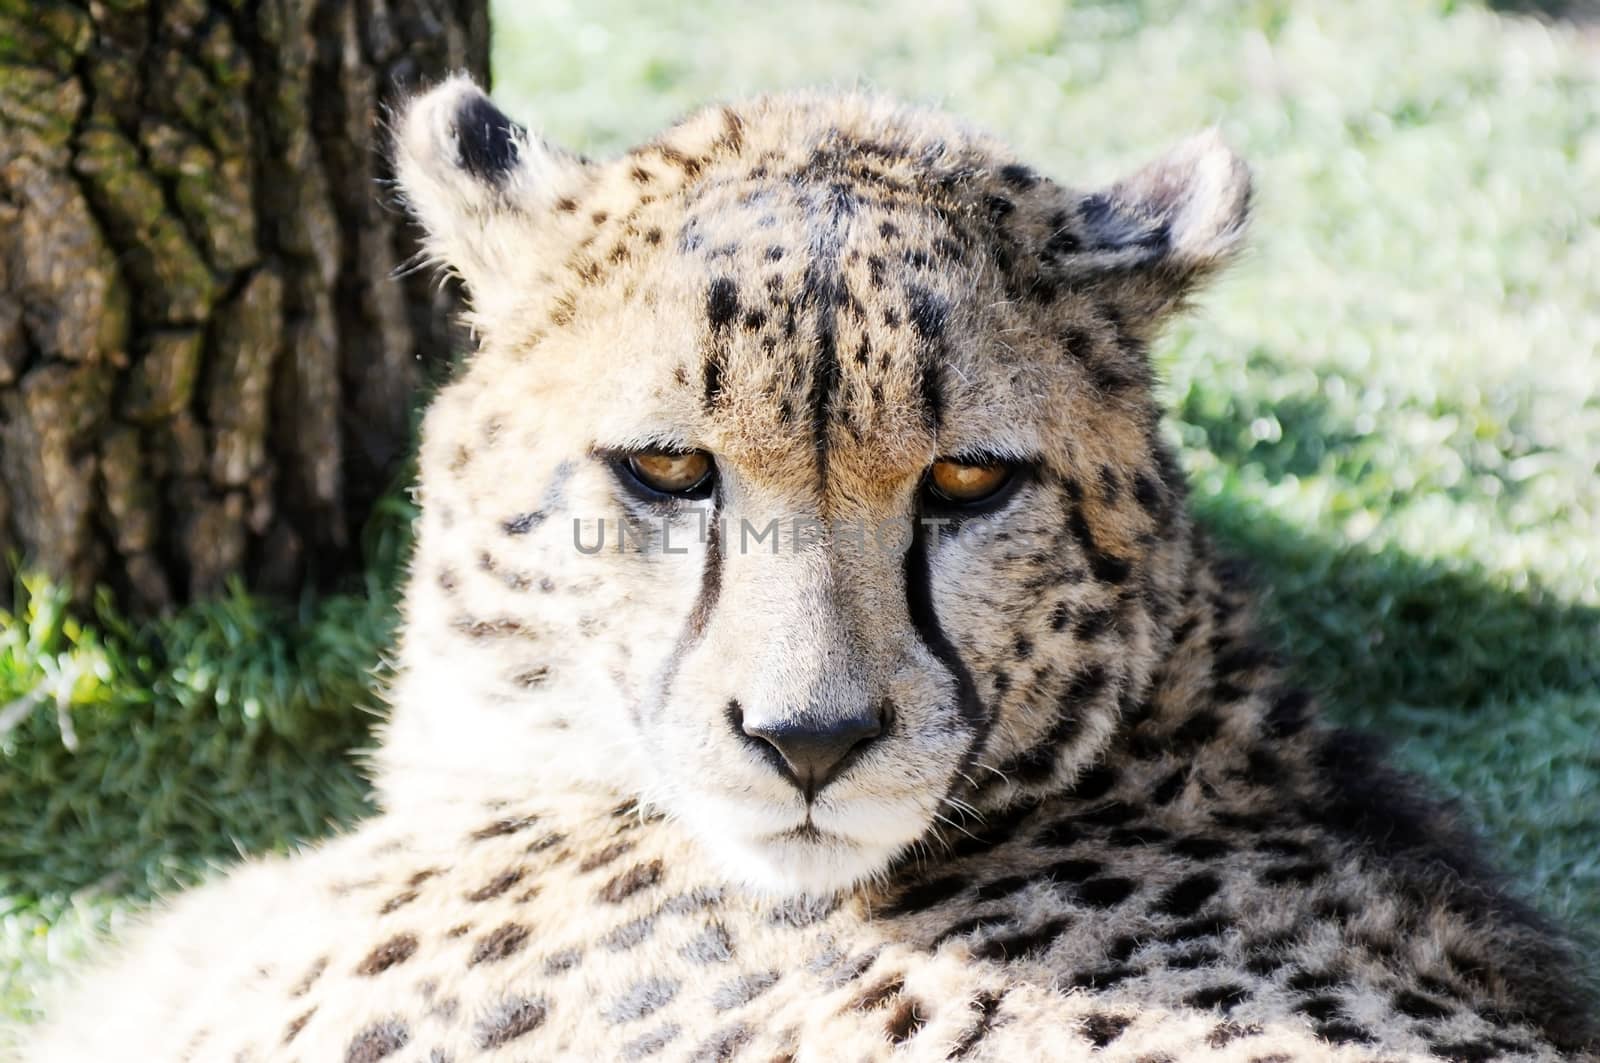 Cheetah face  by kmwphotography